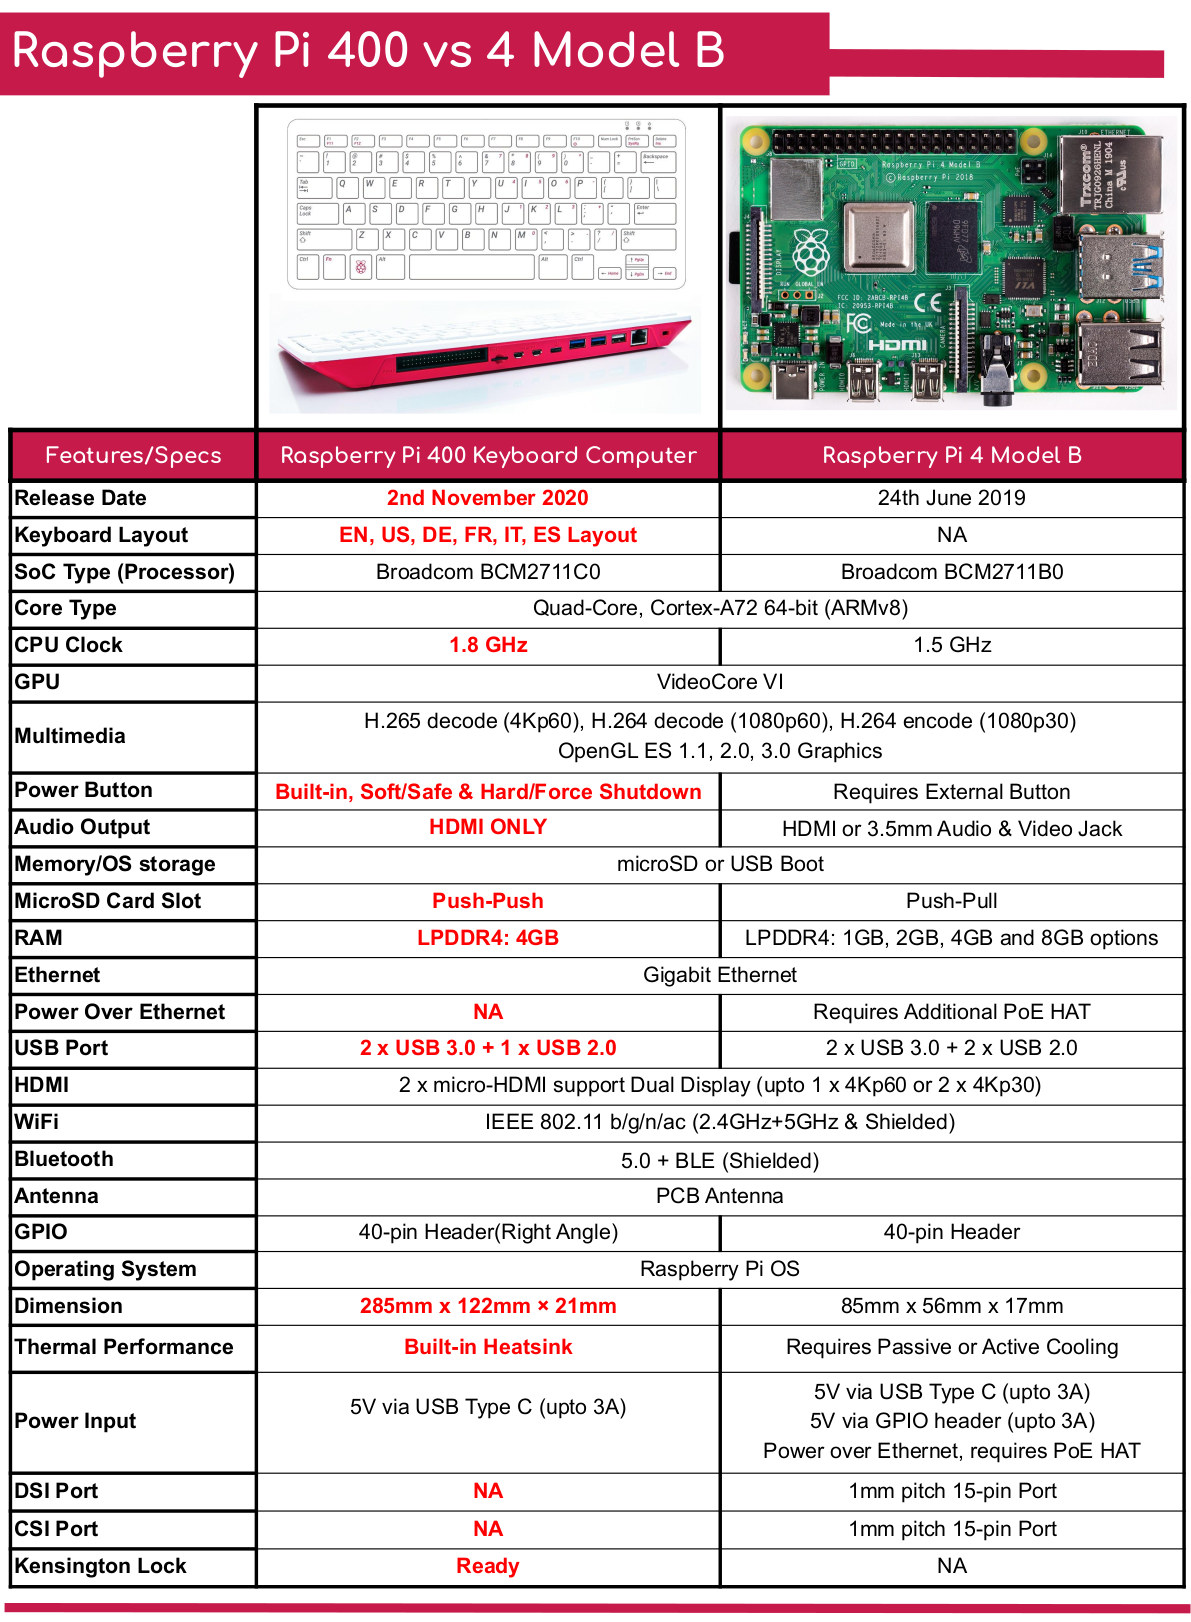 Raspberry Pi 400 vs Raspberry Pi 4: The Differences